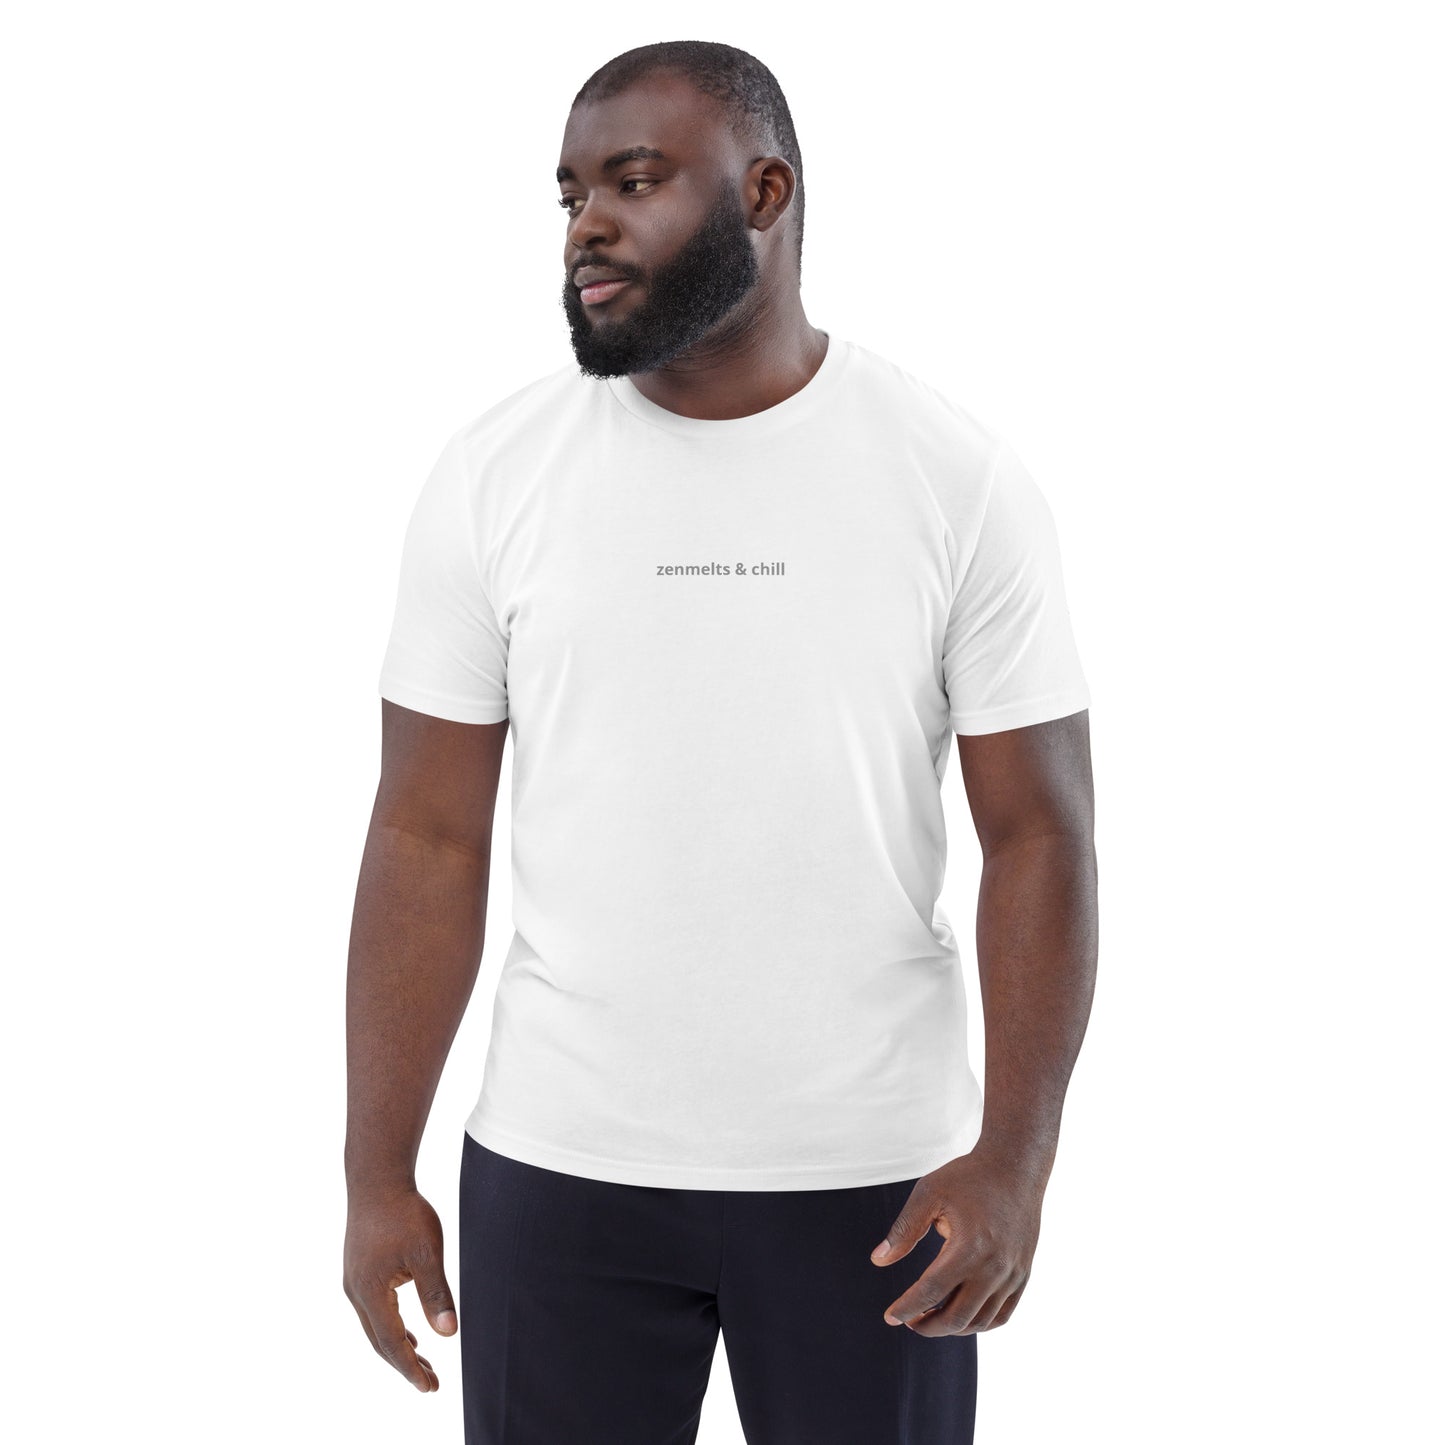 Zenmelt & chill Unisex organic cotton t-shirt